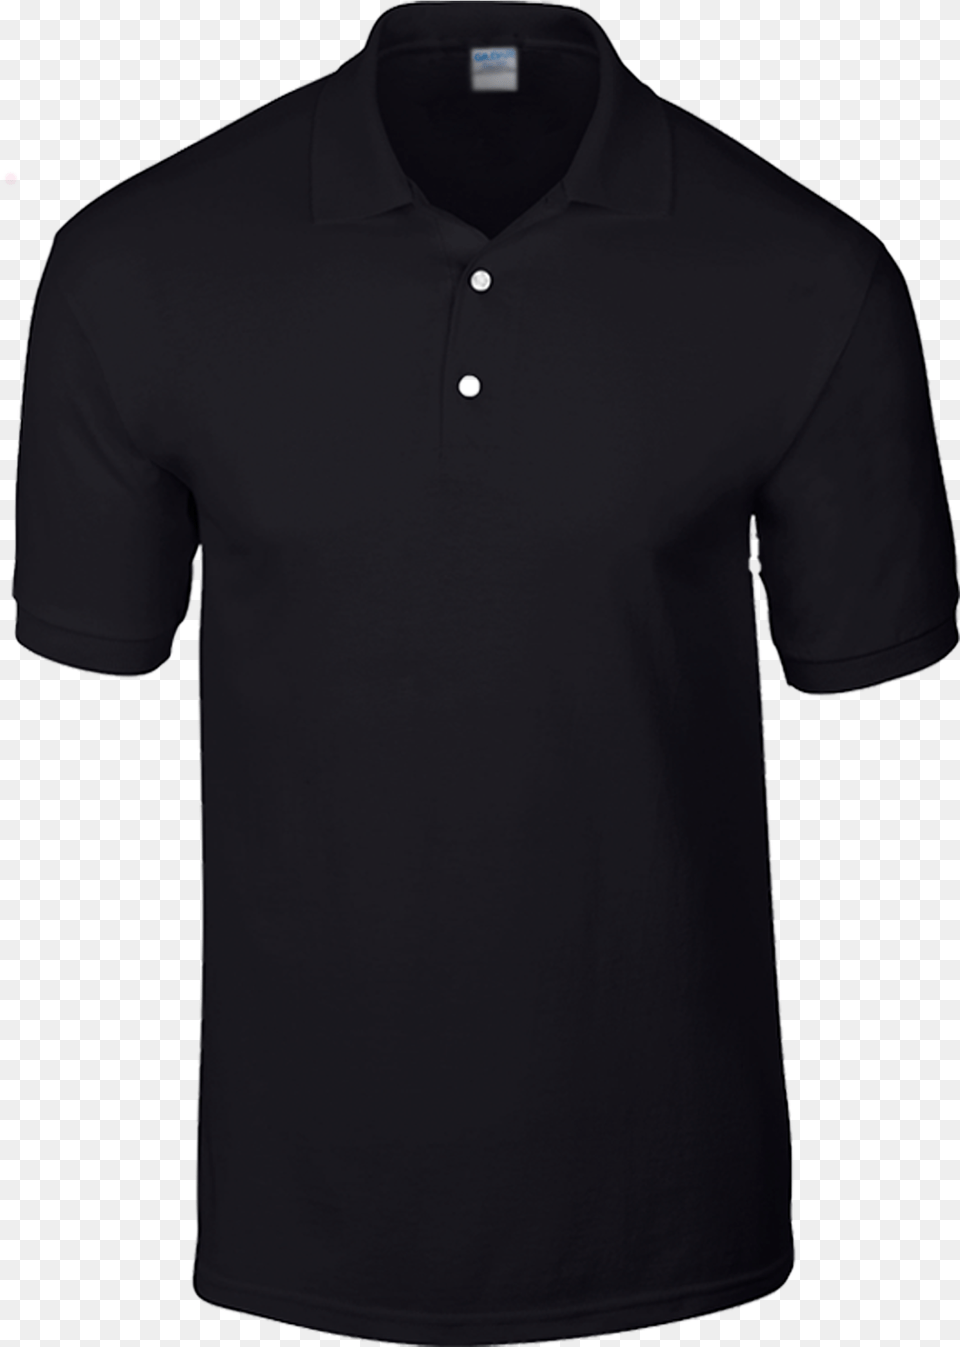 Plain Black Polo Shirt, Clothing, T-shirt, Sleeve, Long Sleeve Free Png Download